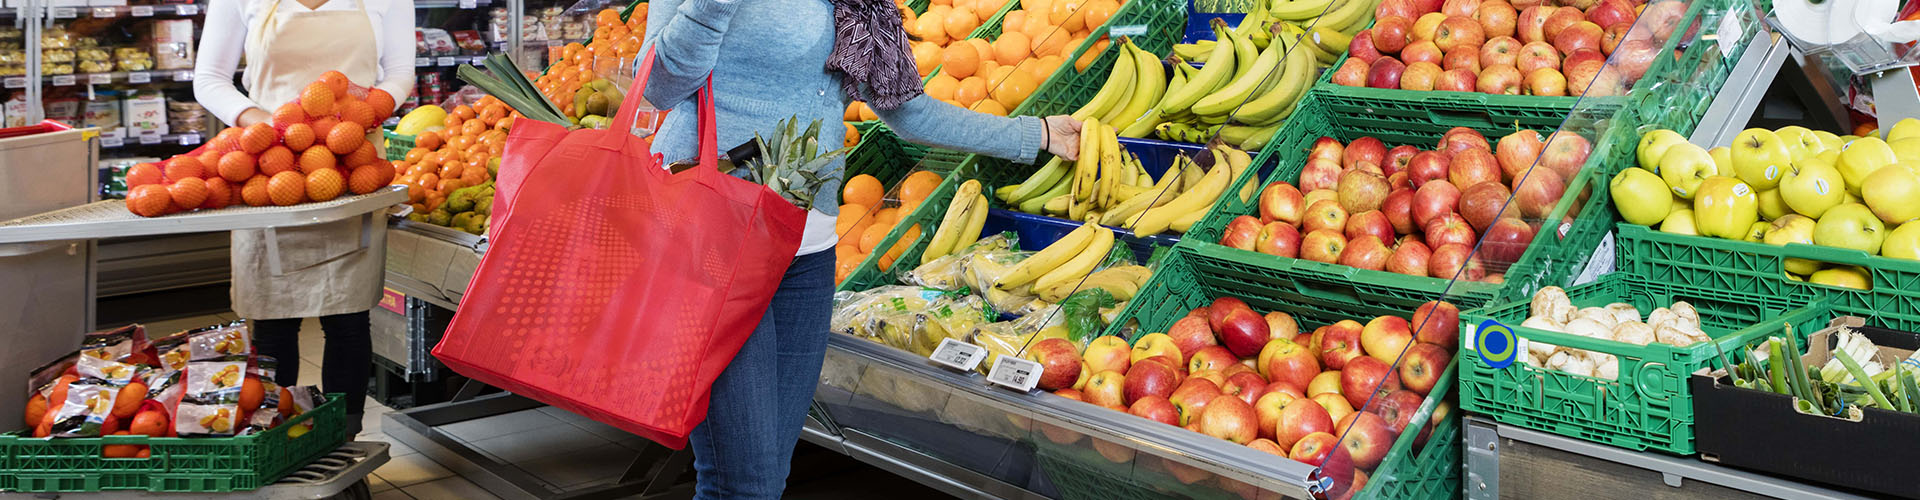 customer buying fresh bananas in grocery shop